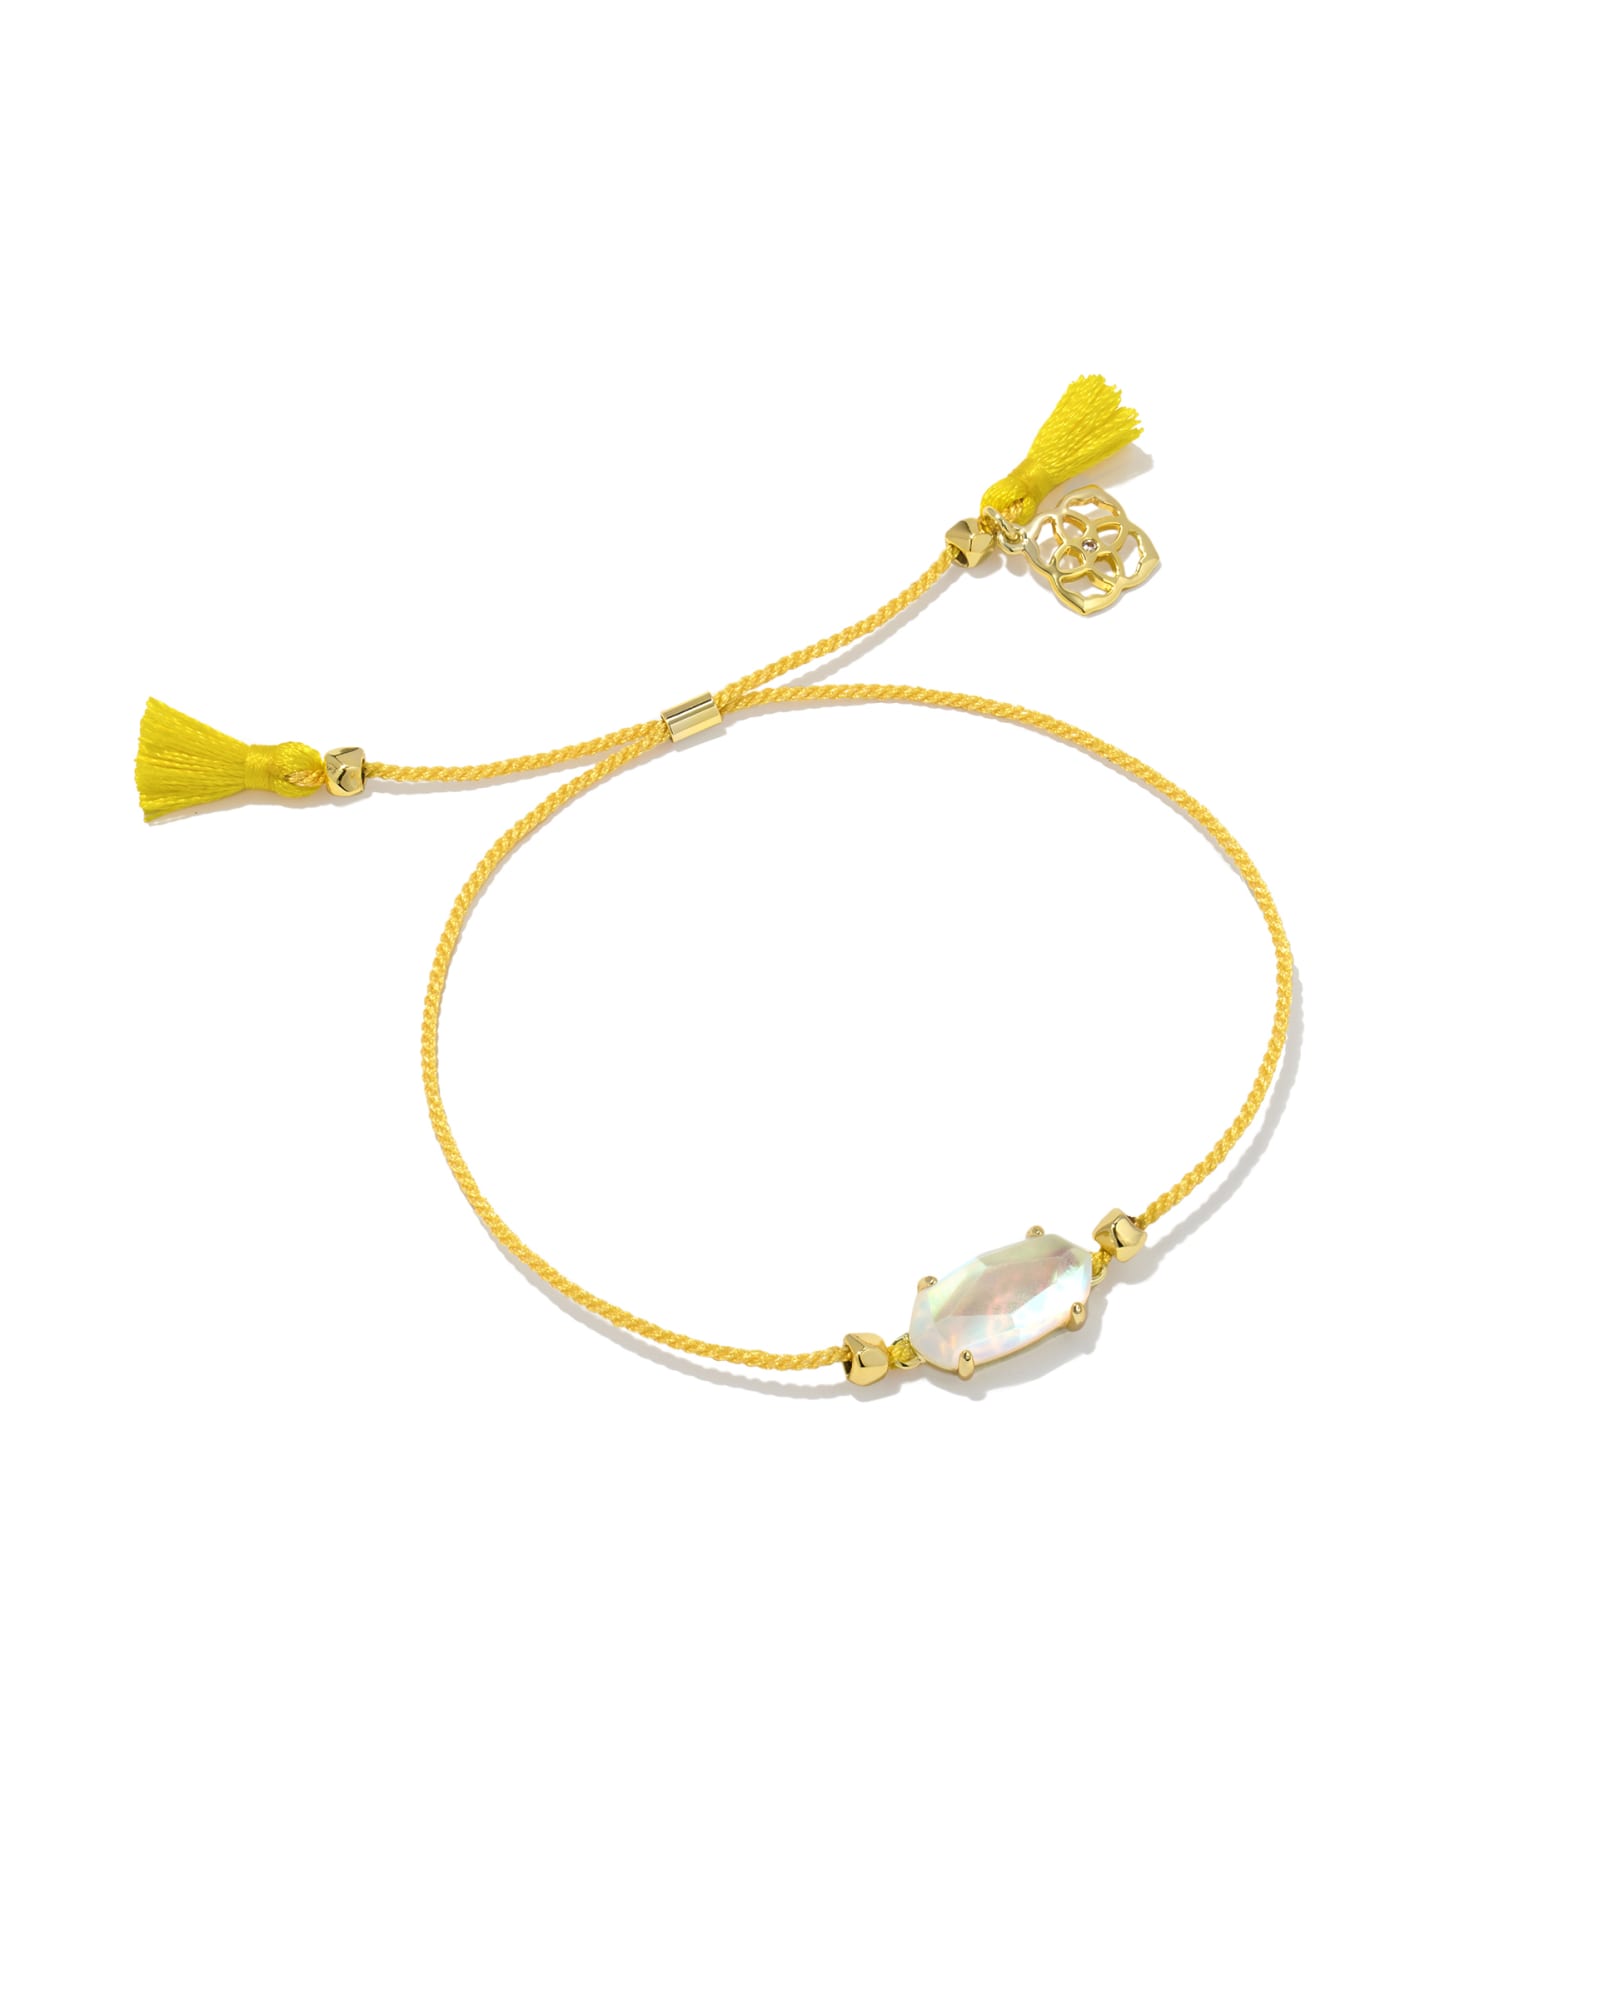 Everlyne Yellow Cord Friendship Bracelet in Dichroic Glass | Kendra Scott